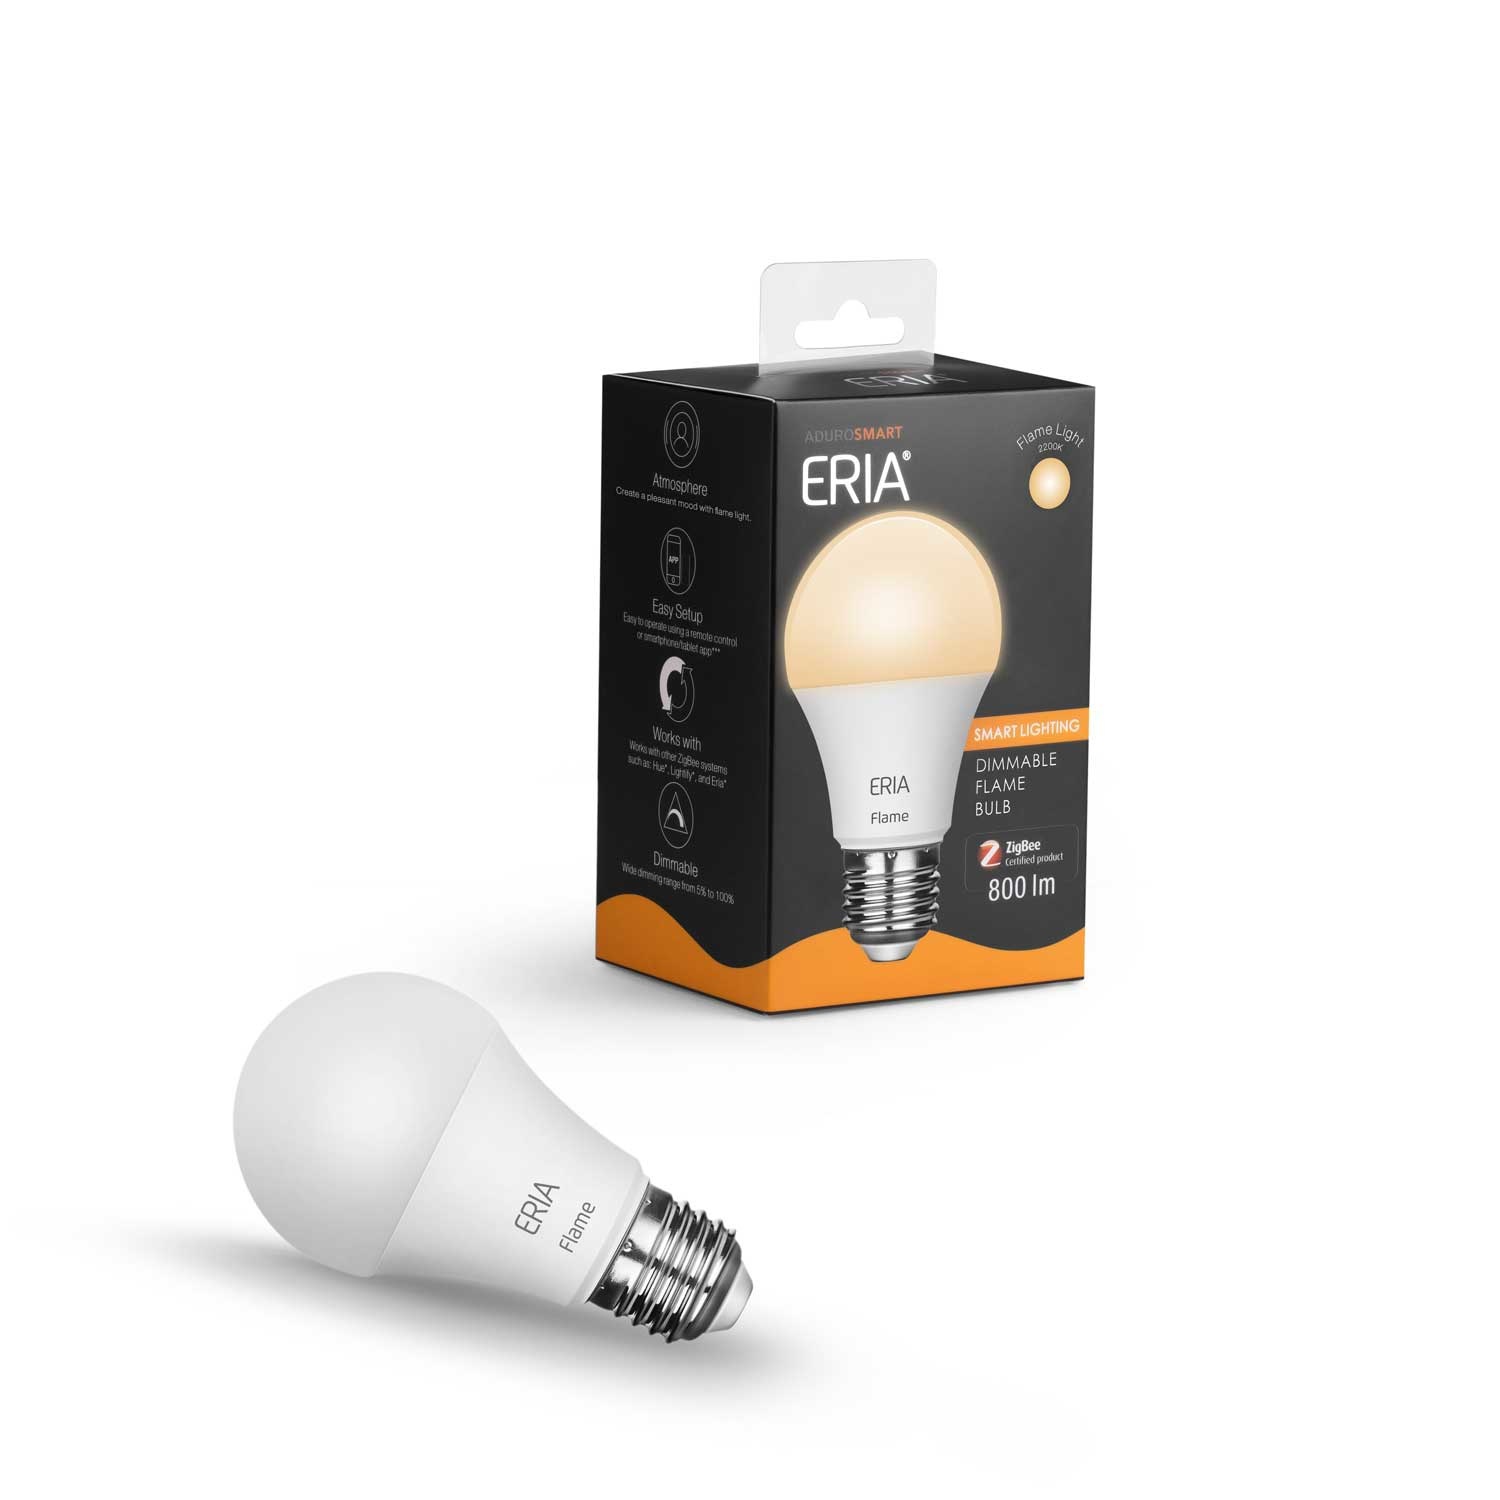 AduroSmart ERIA® E27 lamp Flame - 2200K - warm licht - Zigbee Smart Lamp - werkt met o.a. Adurosmart, Hue en Google Home